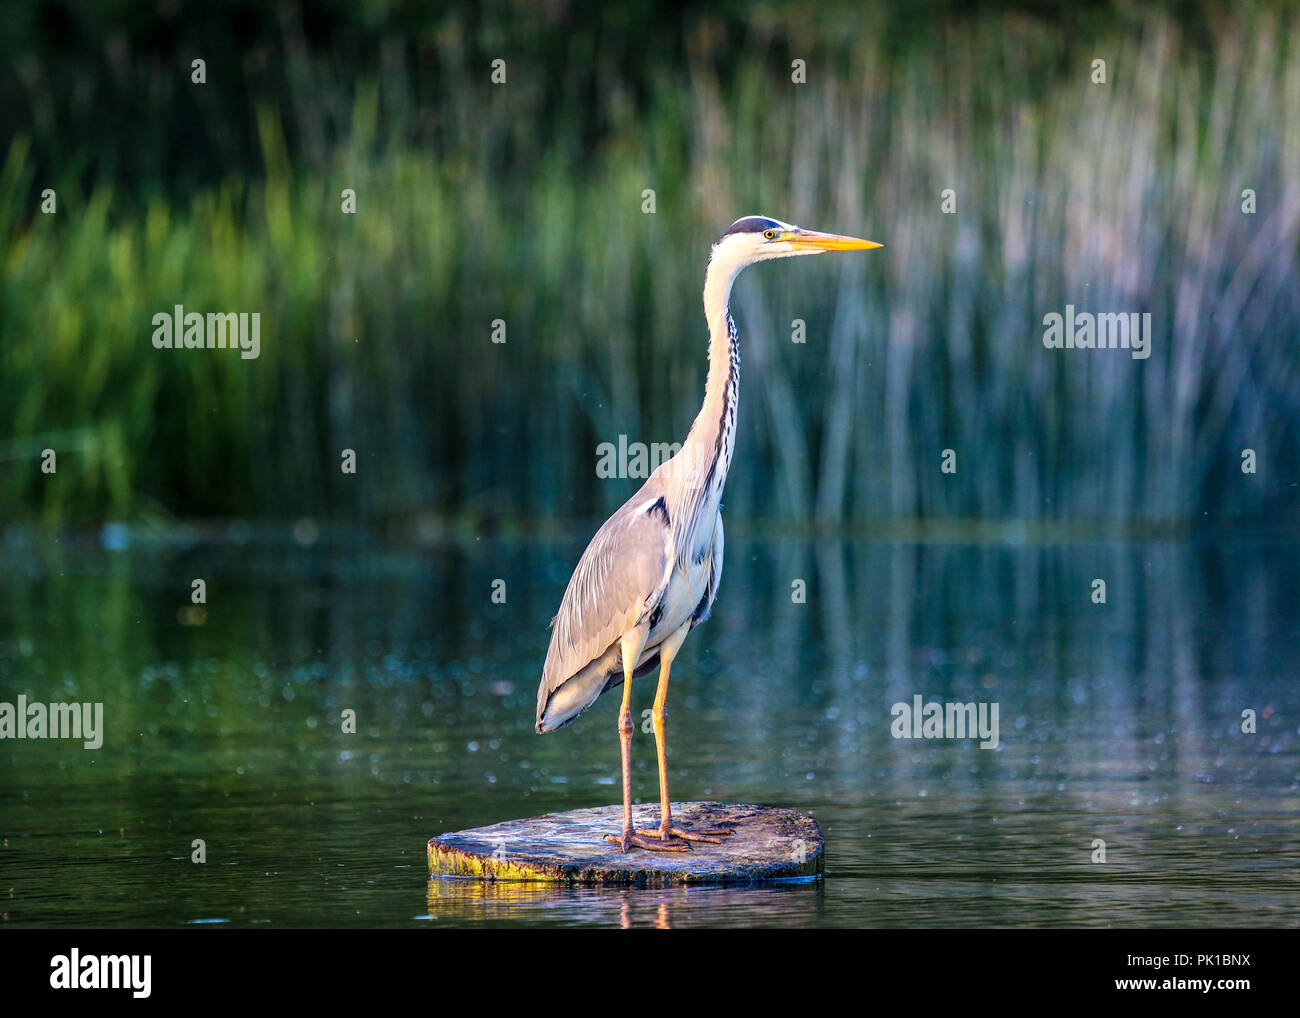 Heron on the water Stock Photo